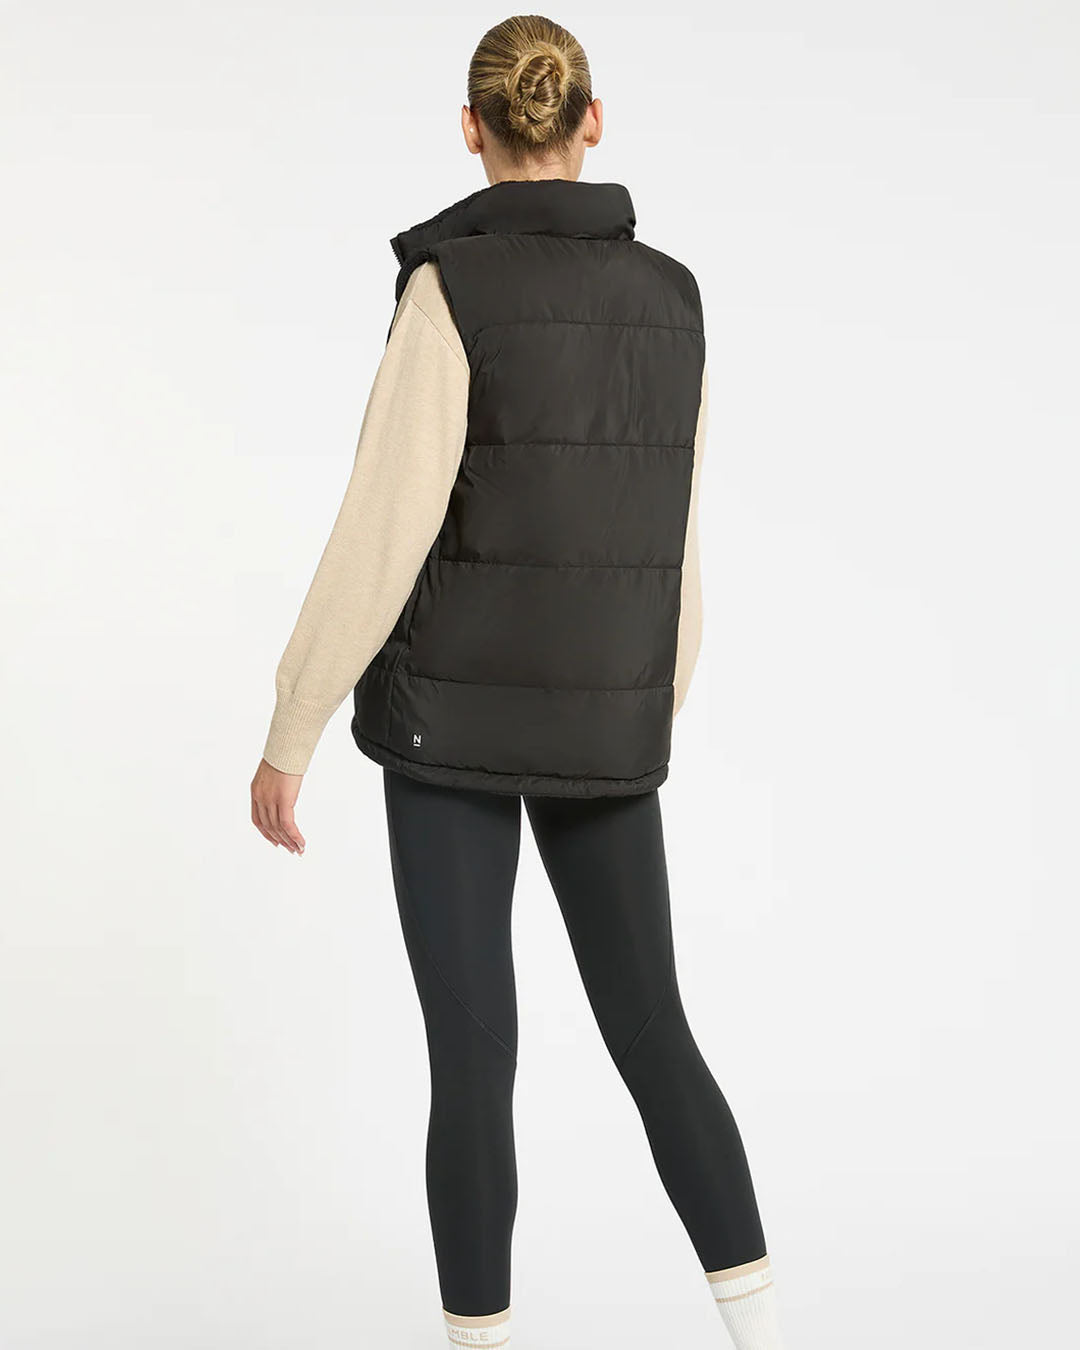 Reversible Half-Time Vest - Black Jackets by Nimble - Prae Store